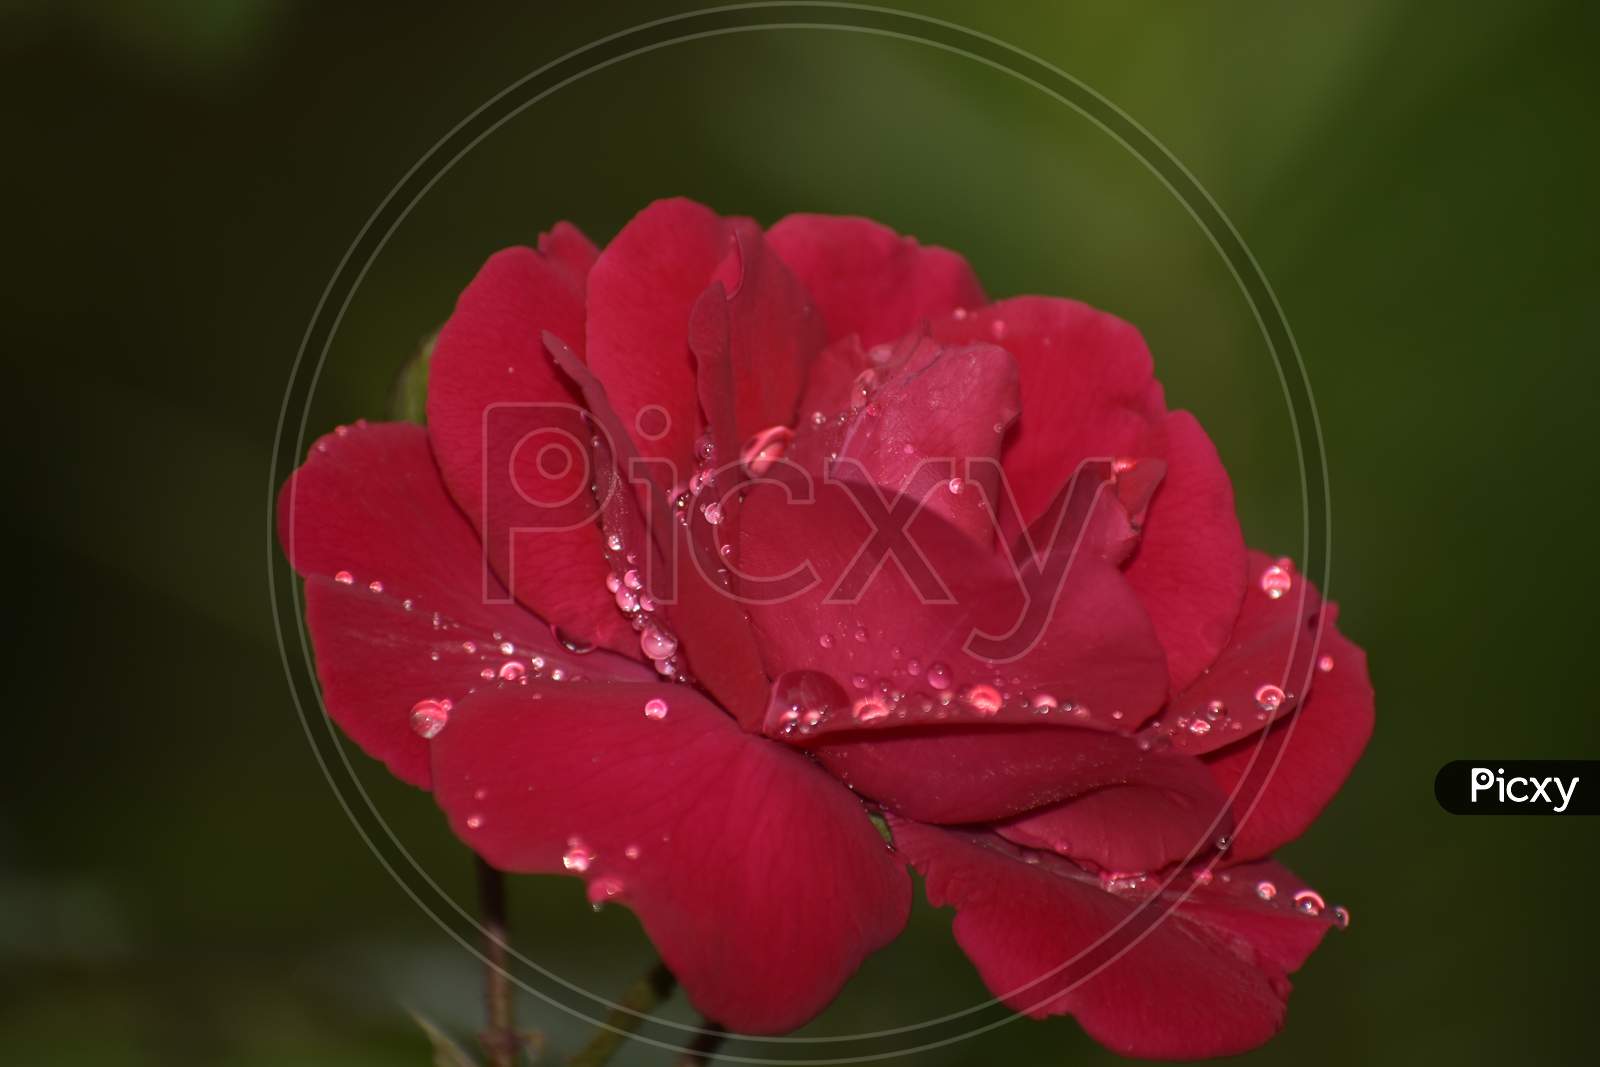 A Beautiful Closeup Of A Red Rose After Rain.